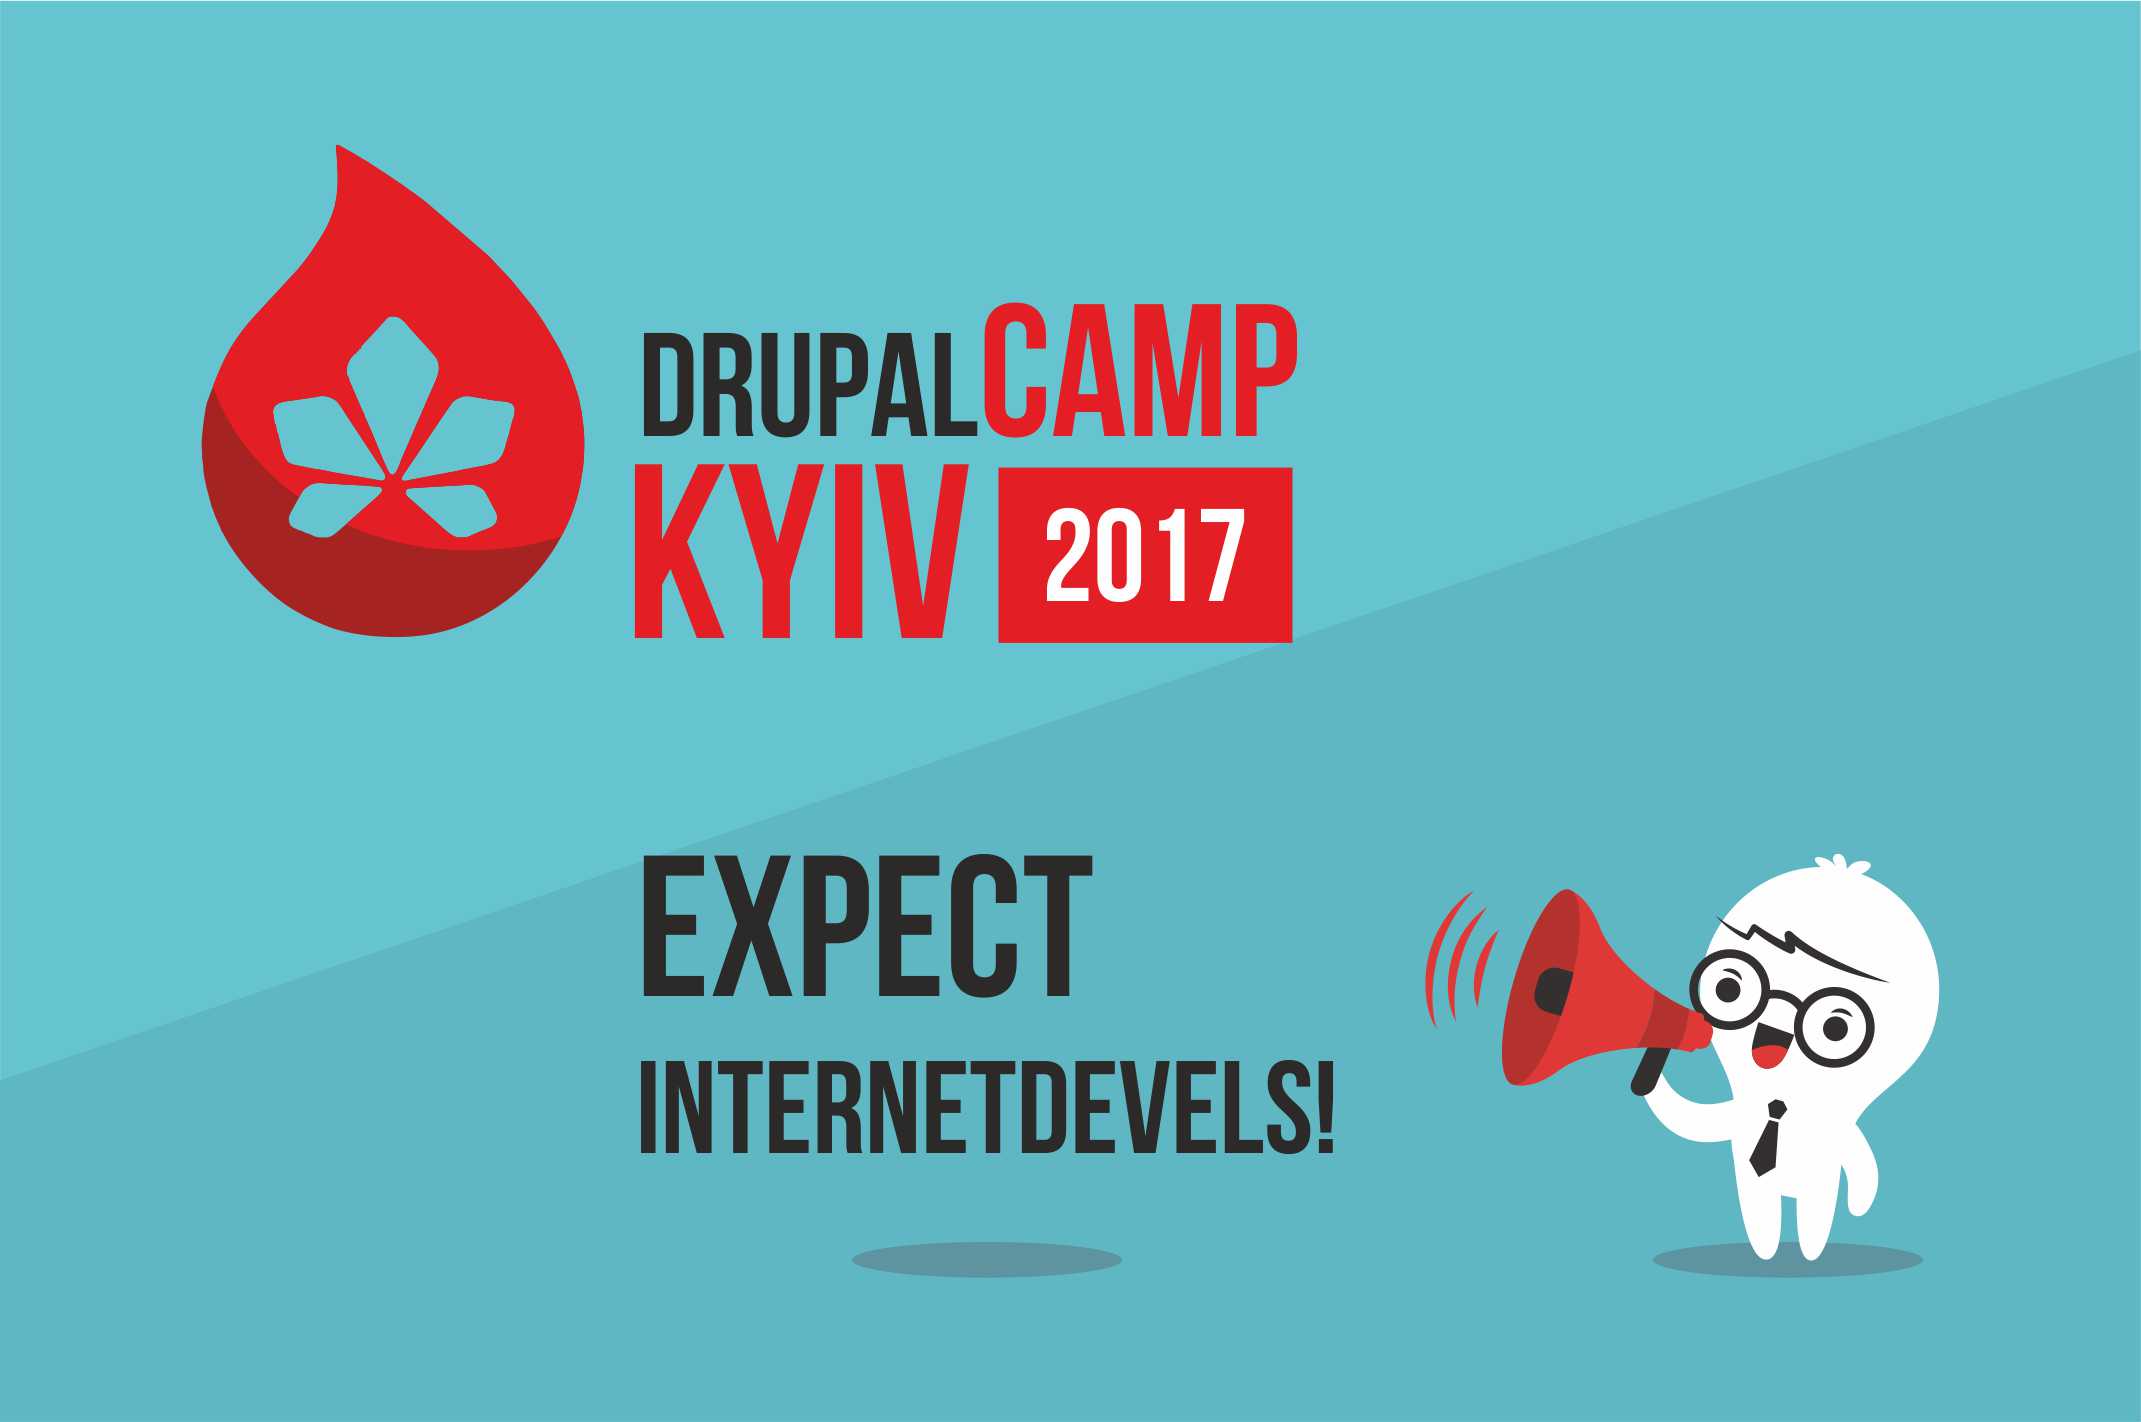 InternetDevels is sponsoring and visiting Kyiv DrupalCamp 2017